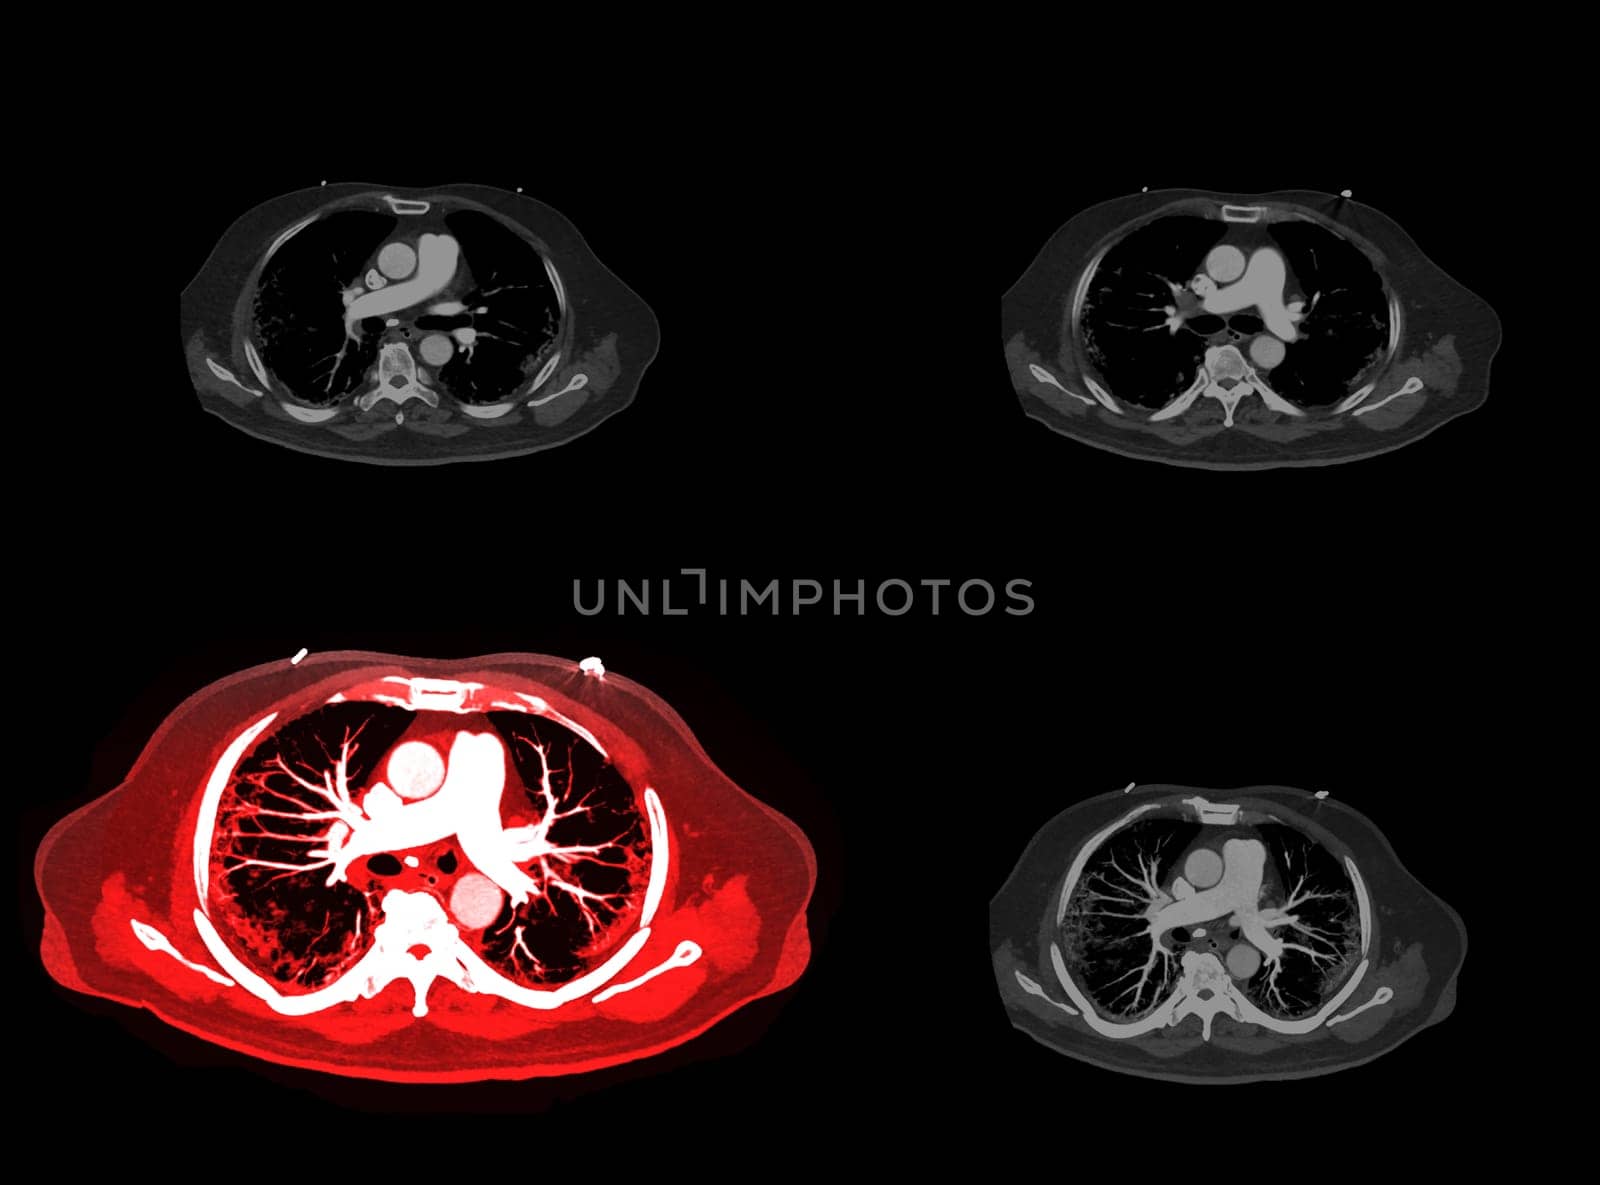 CTA pulmonary arteries 3D rendering showing branch of pulmonary artery by samunella